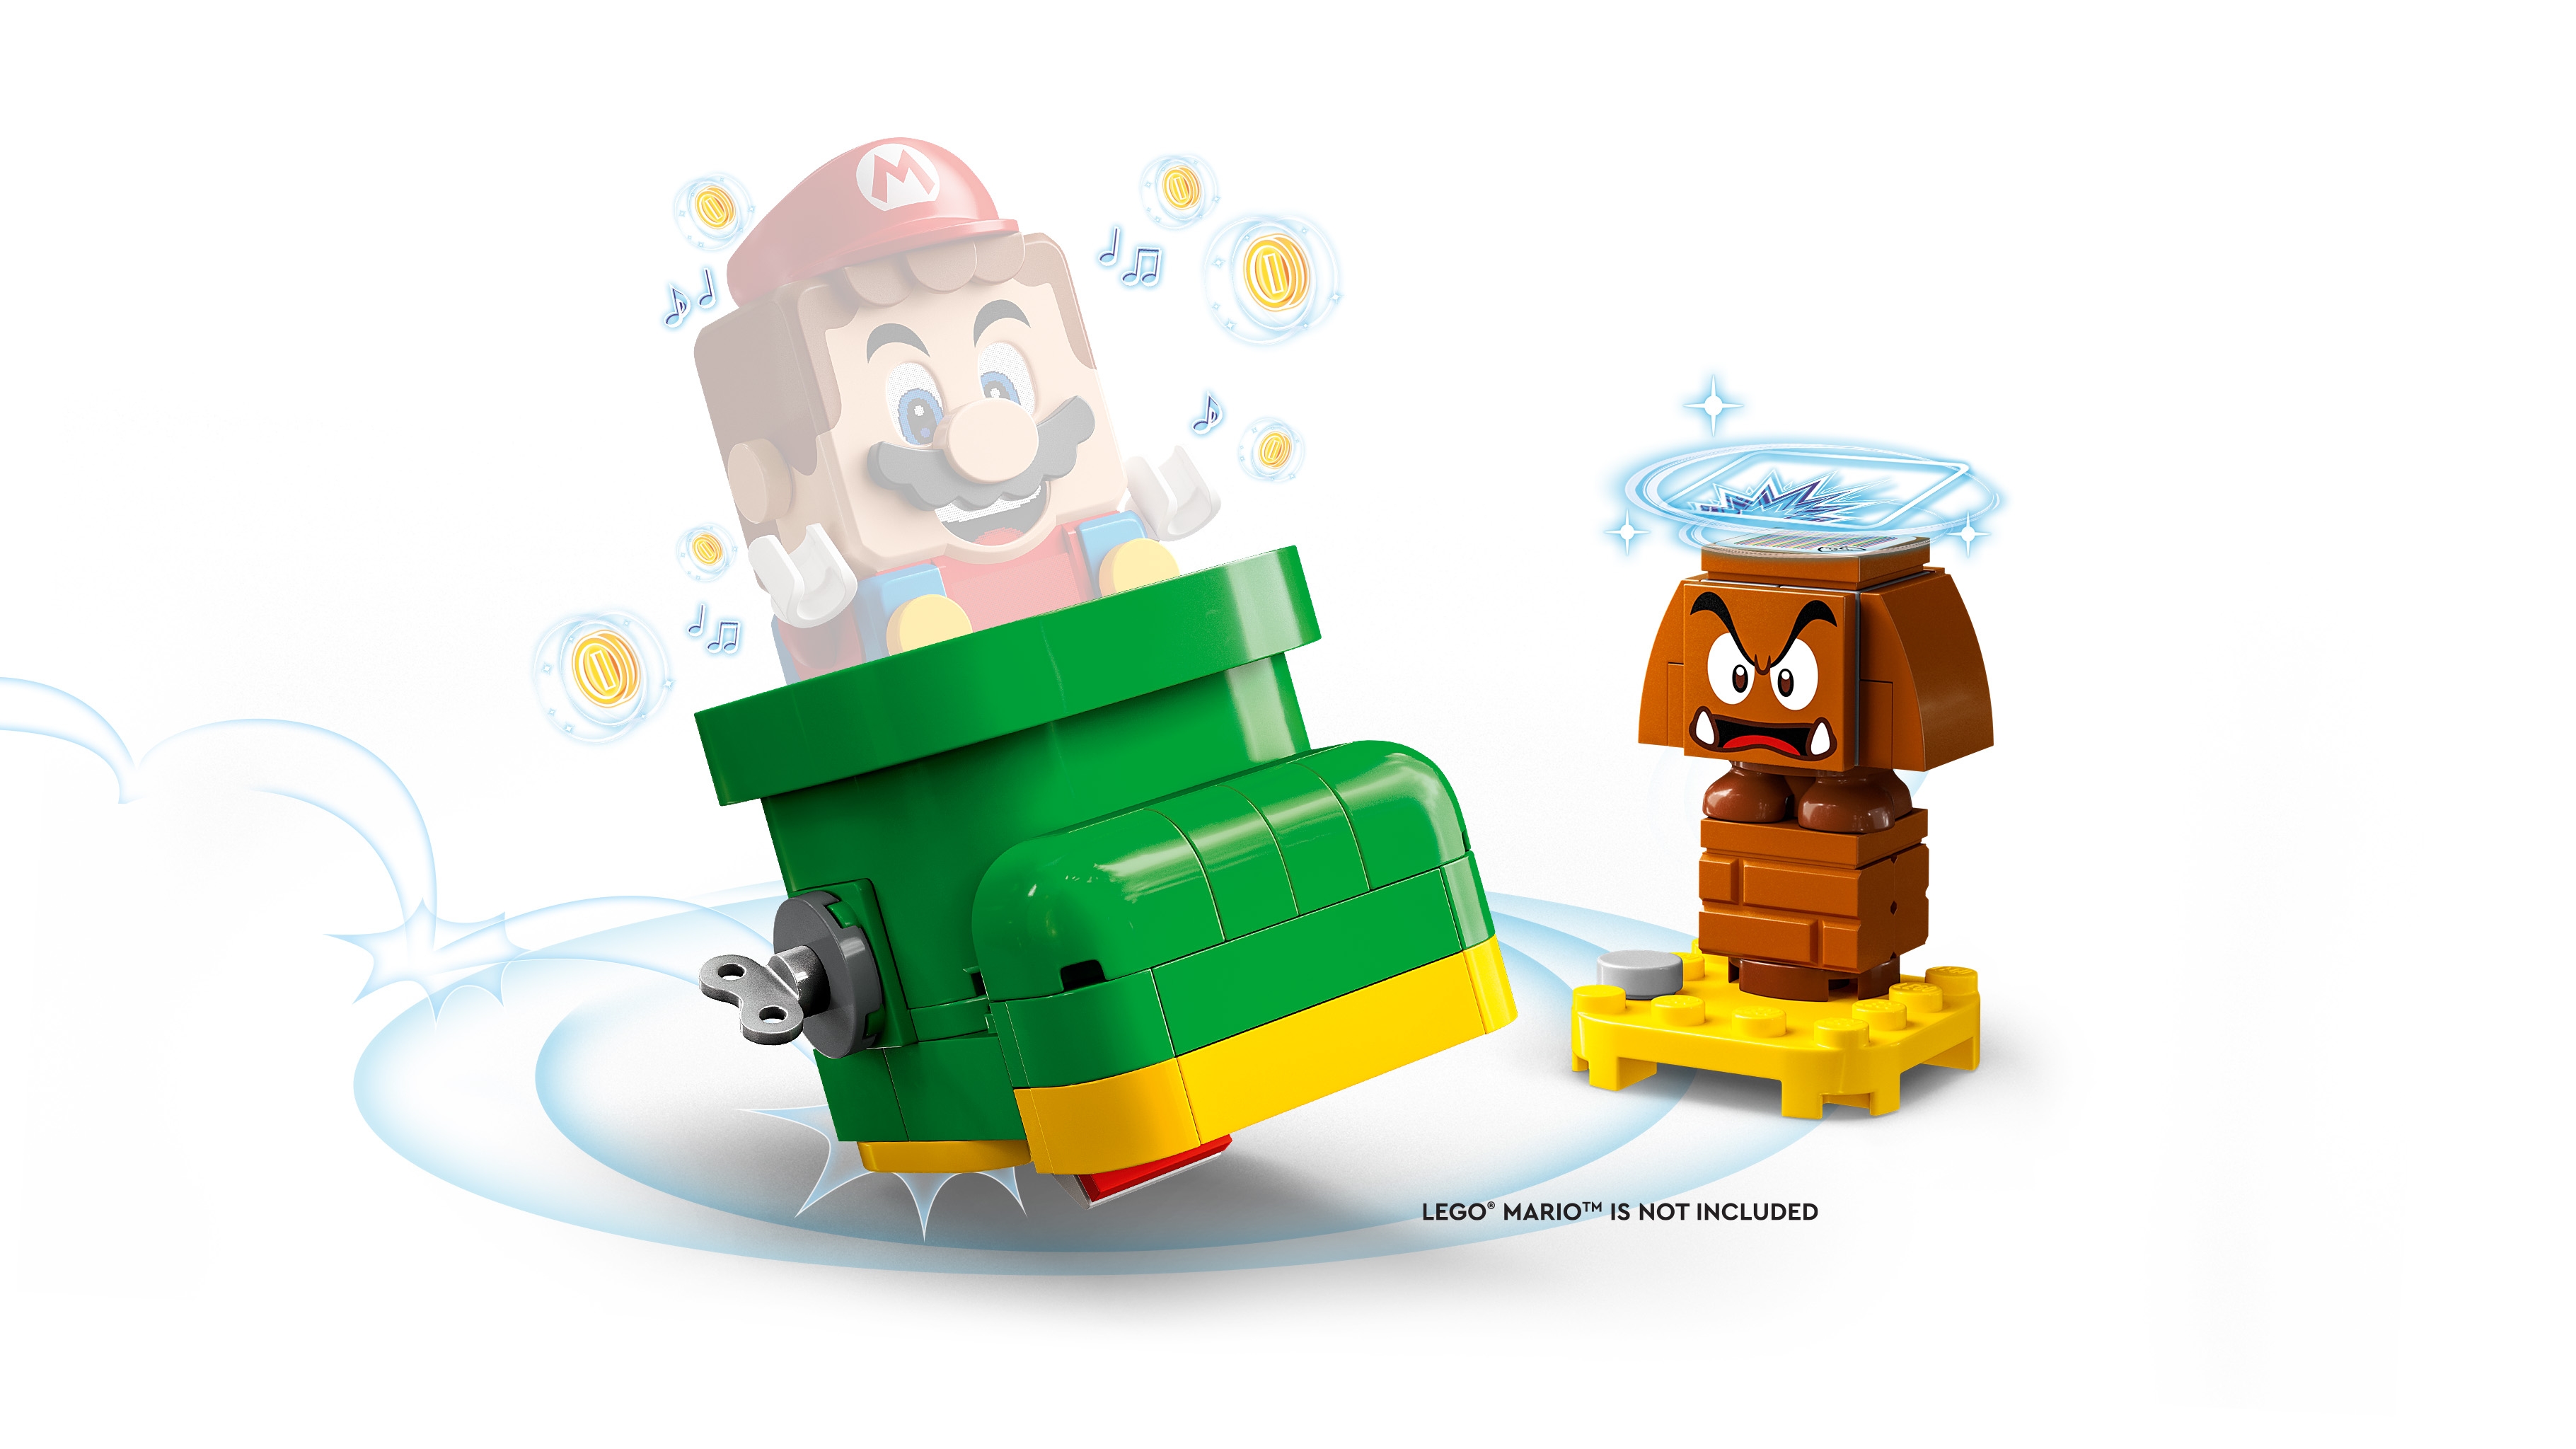 LEGO® Super Mario™ Goomba's Shoe Expansion Set - Nintendo Official Site